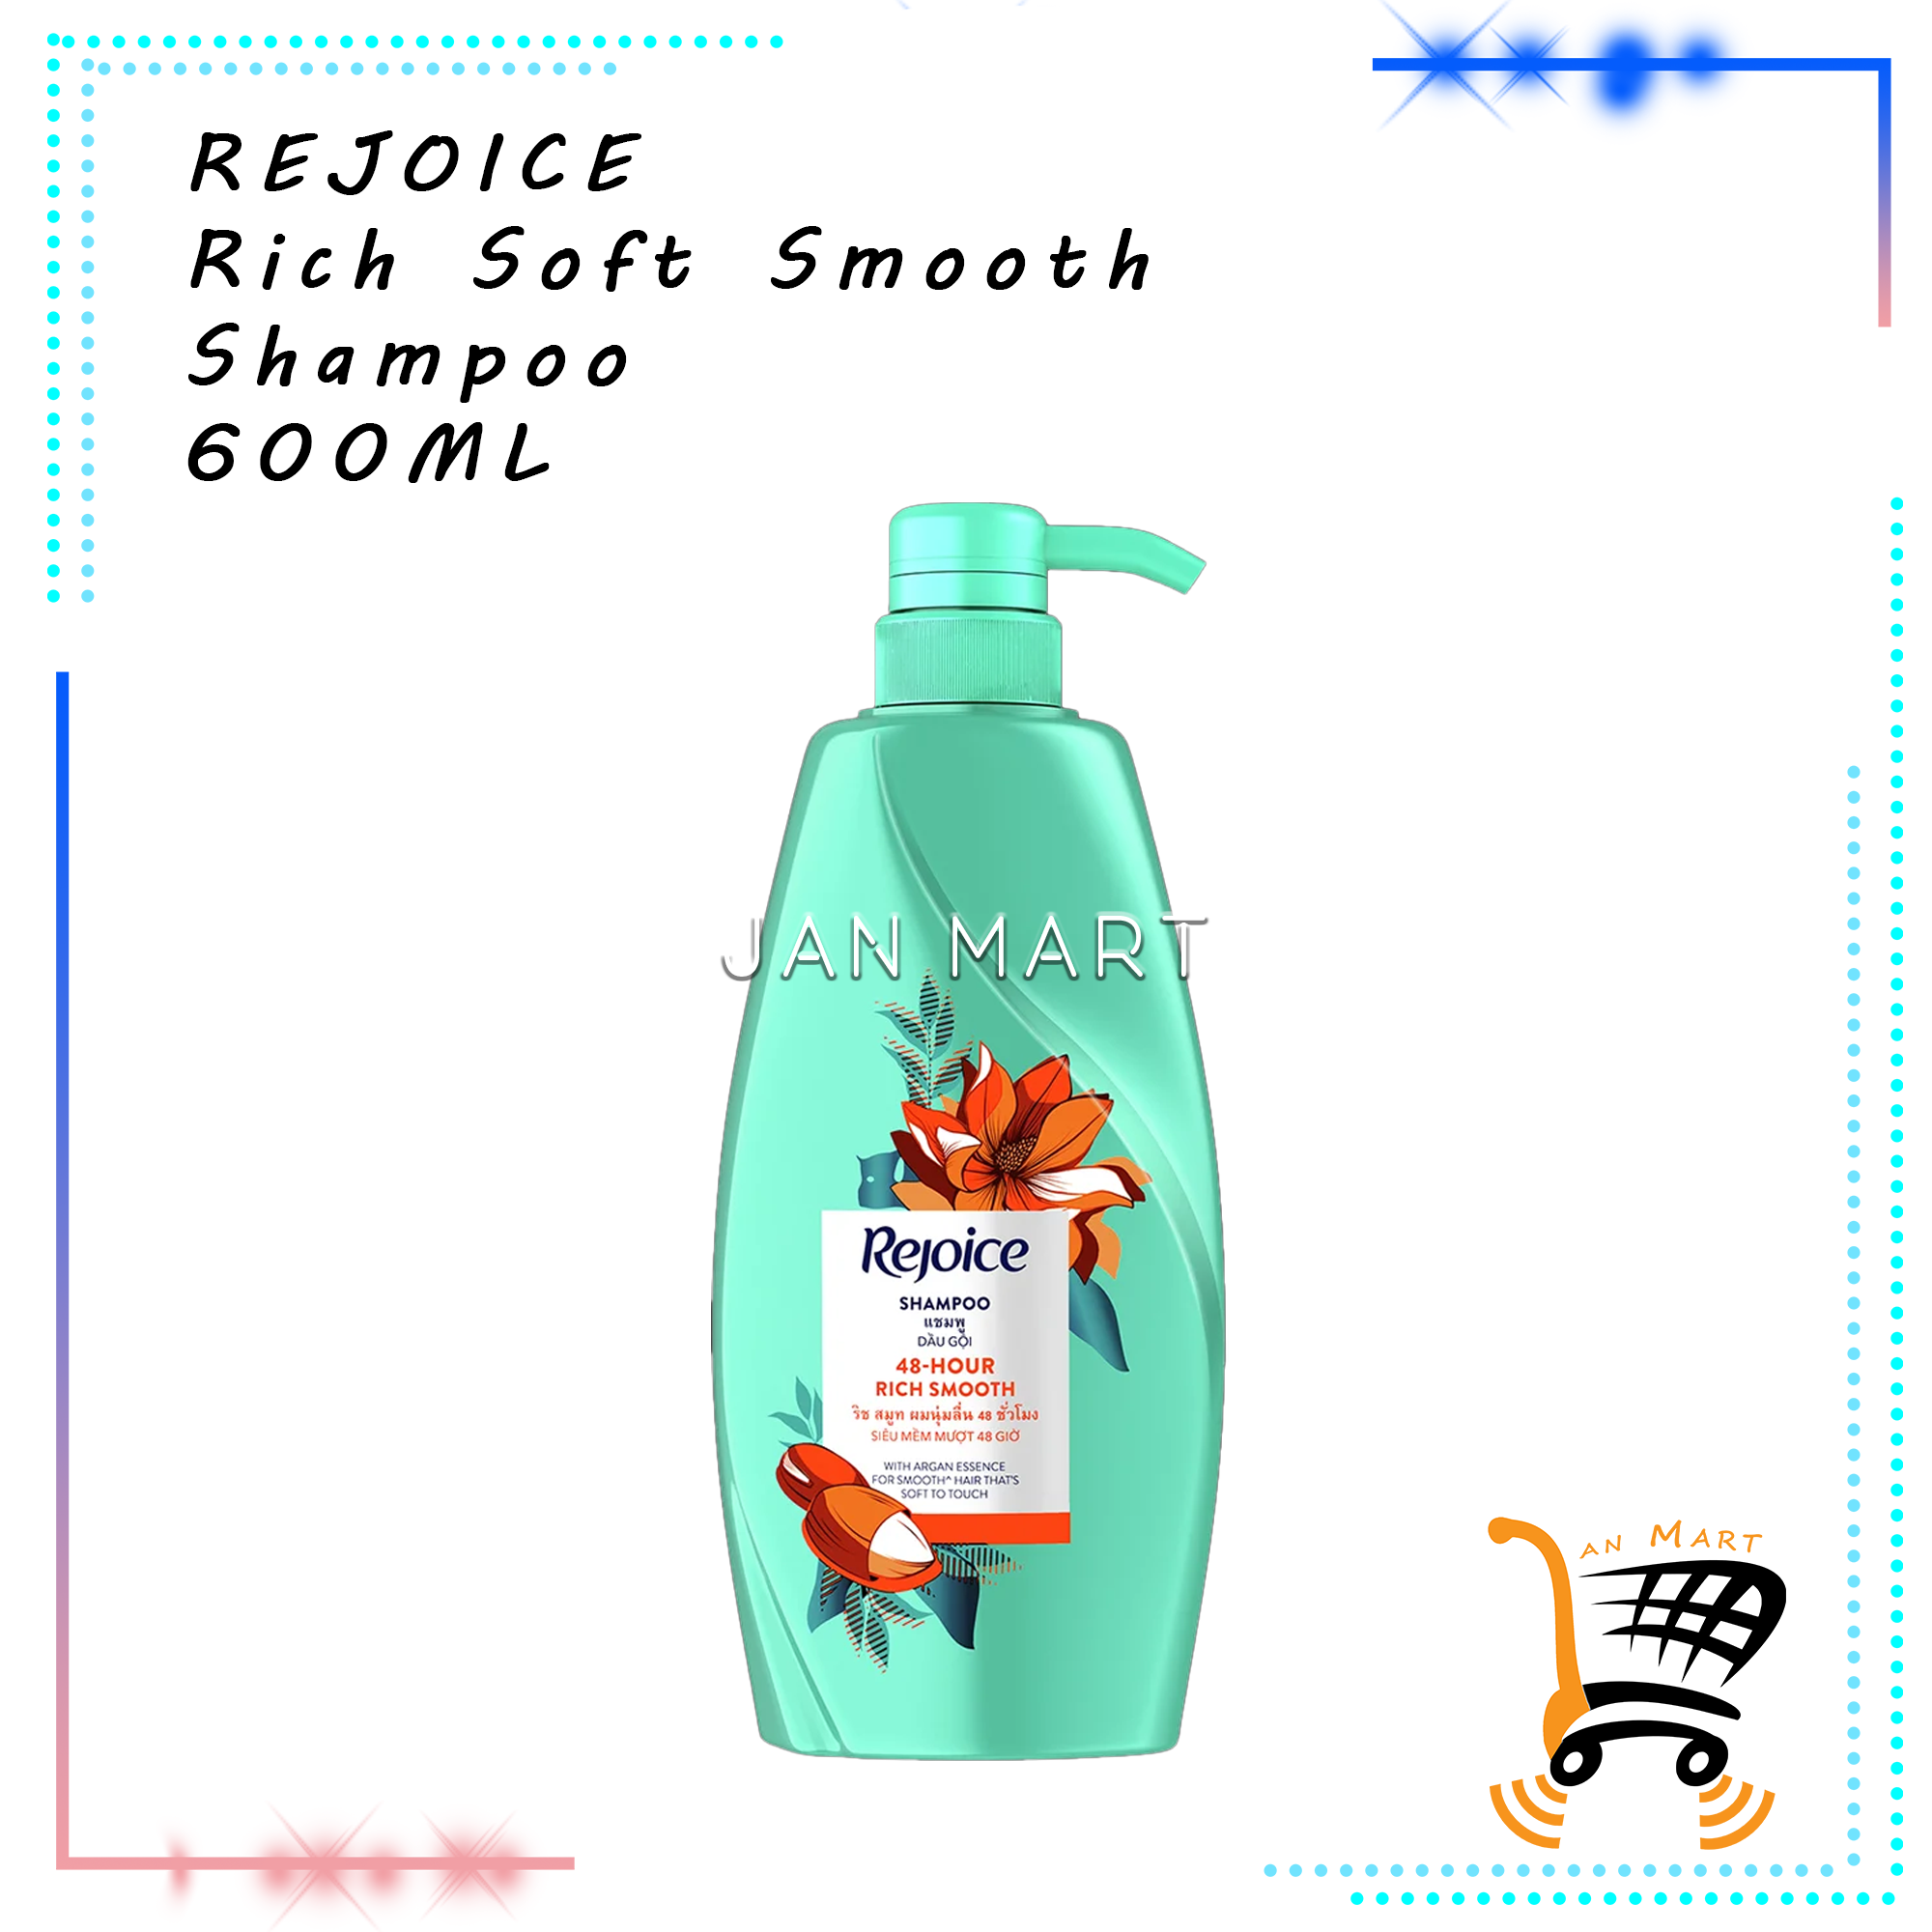 REJOICE Shampoo 600ML